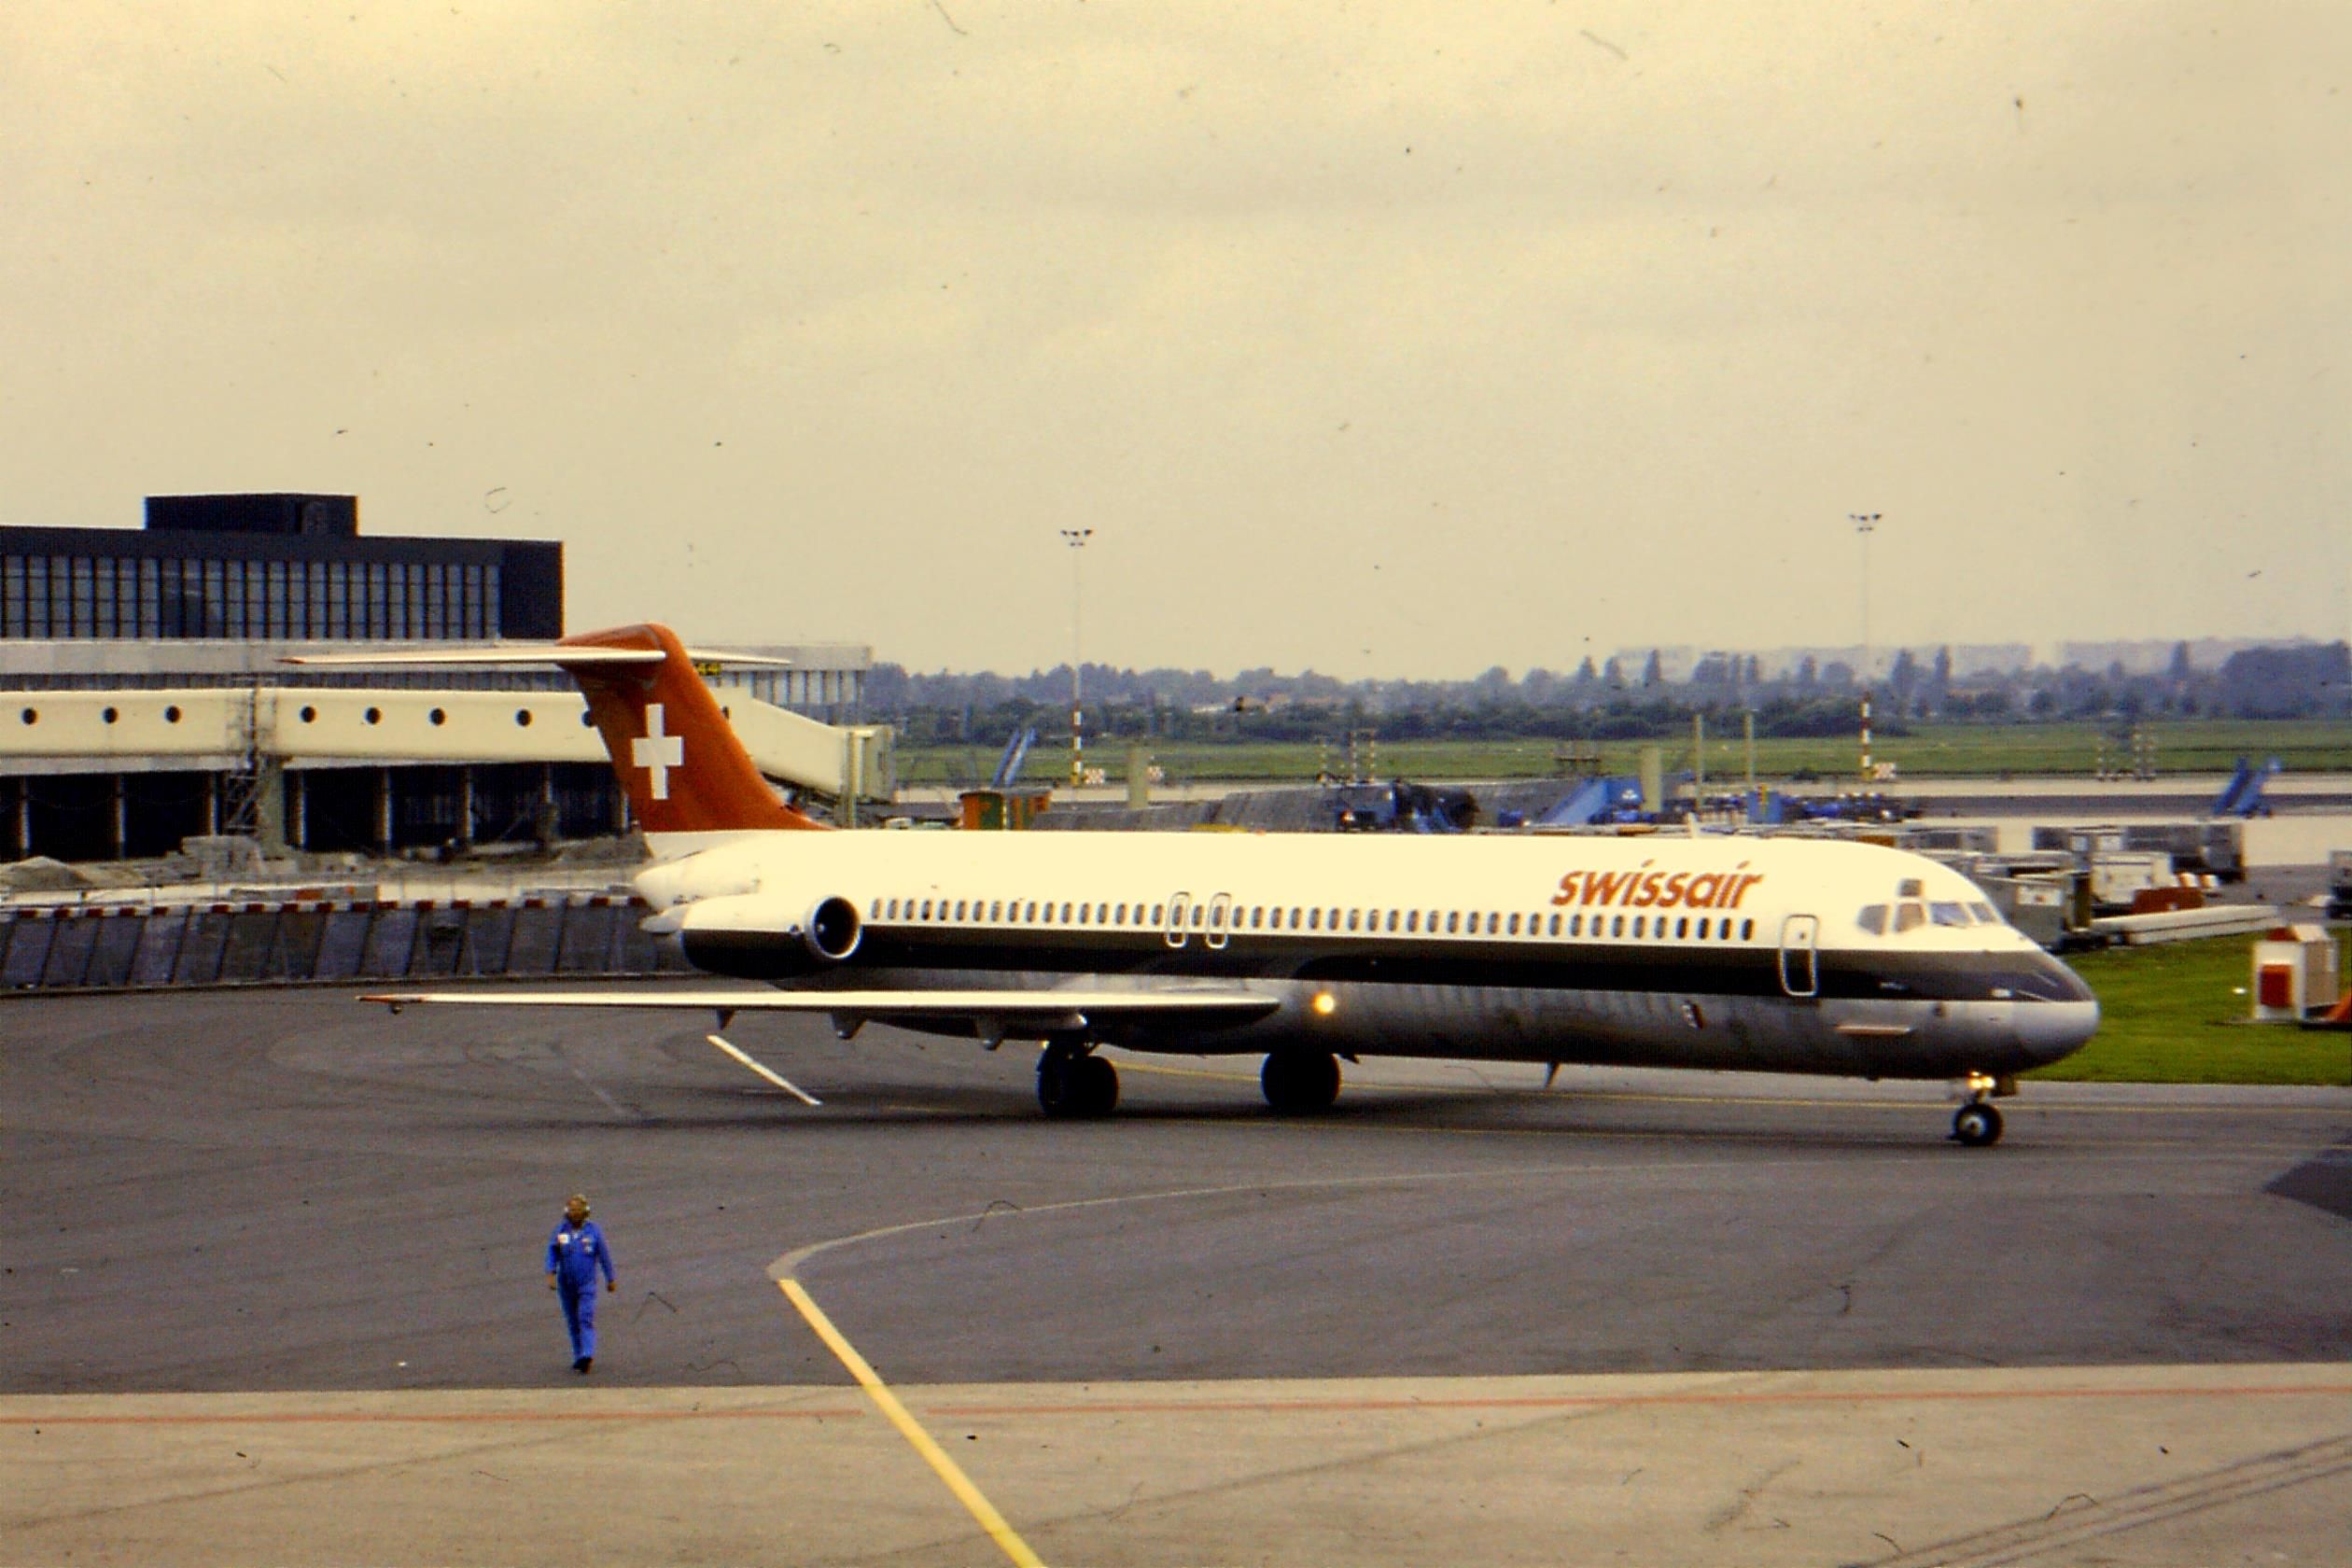 Swissair MD-80